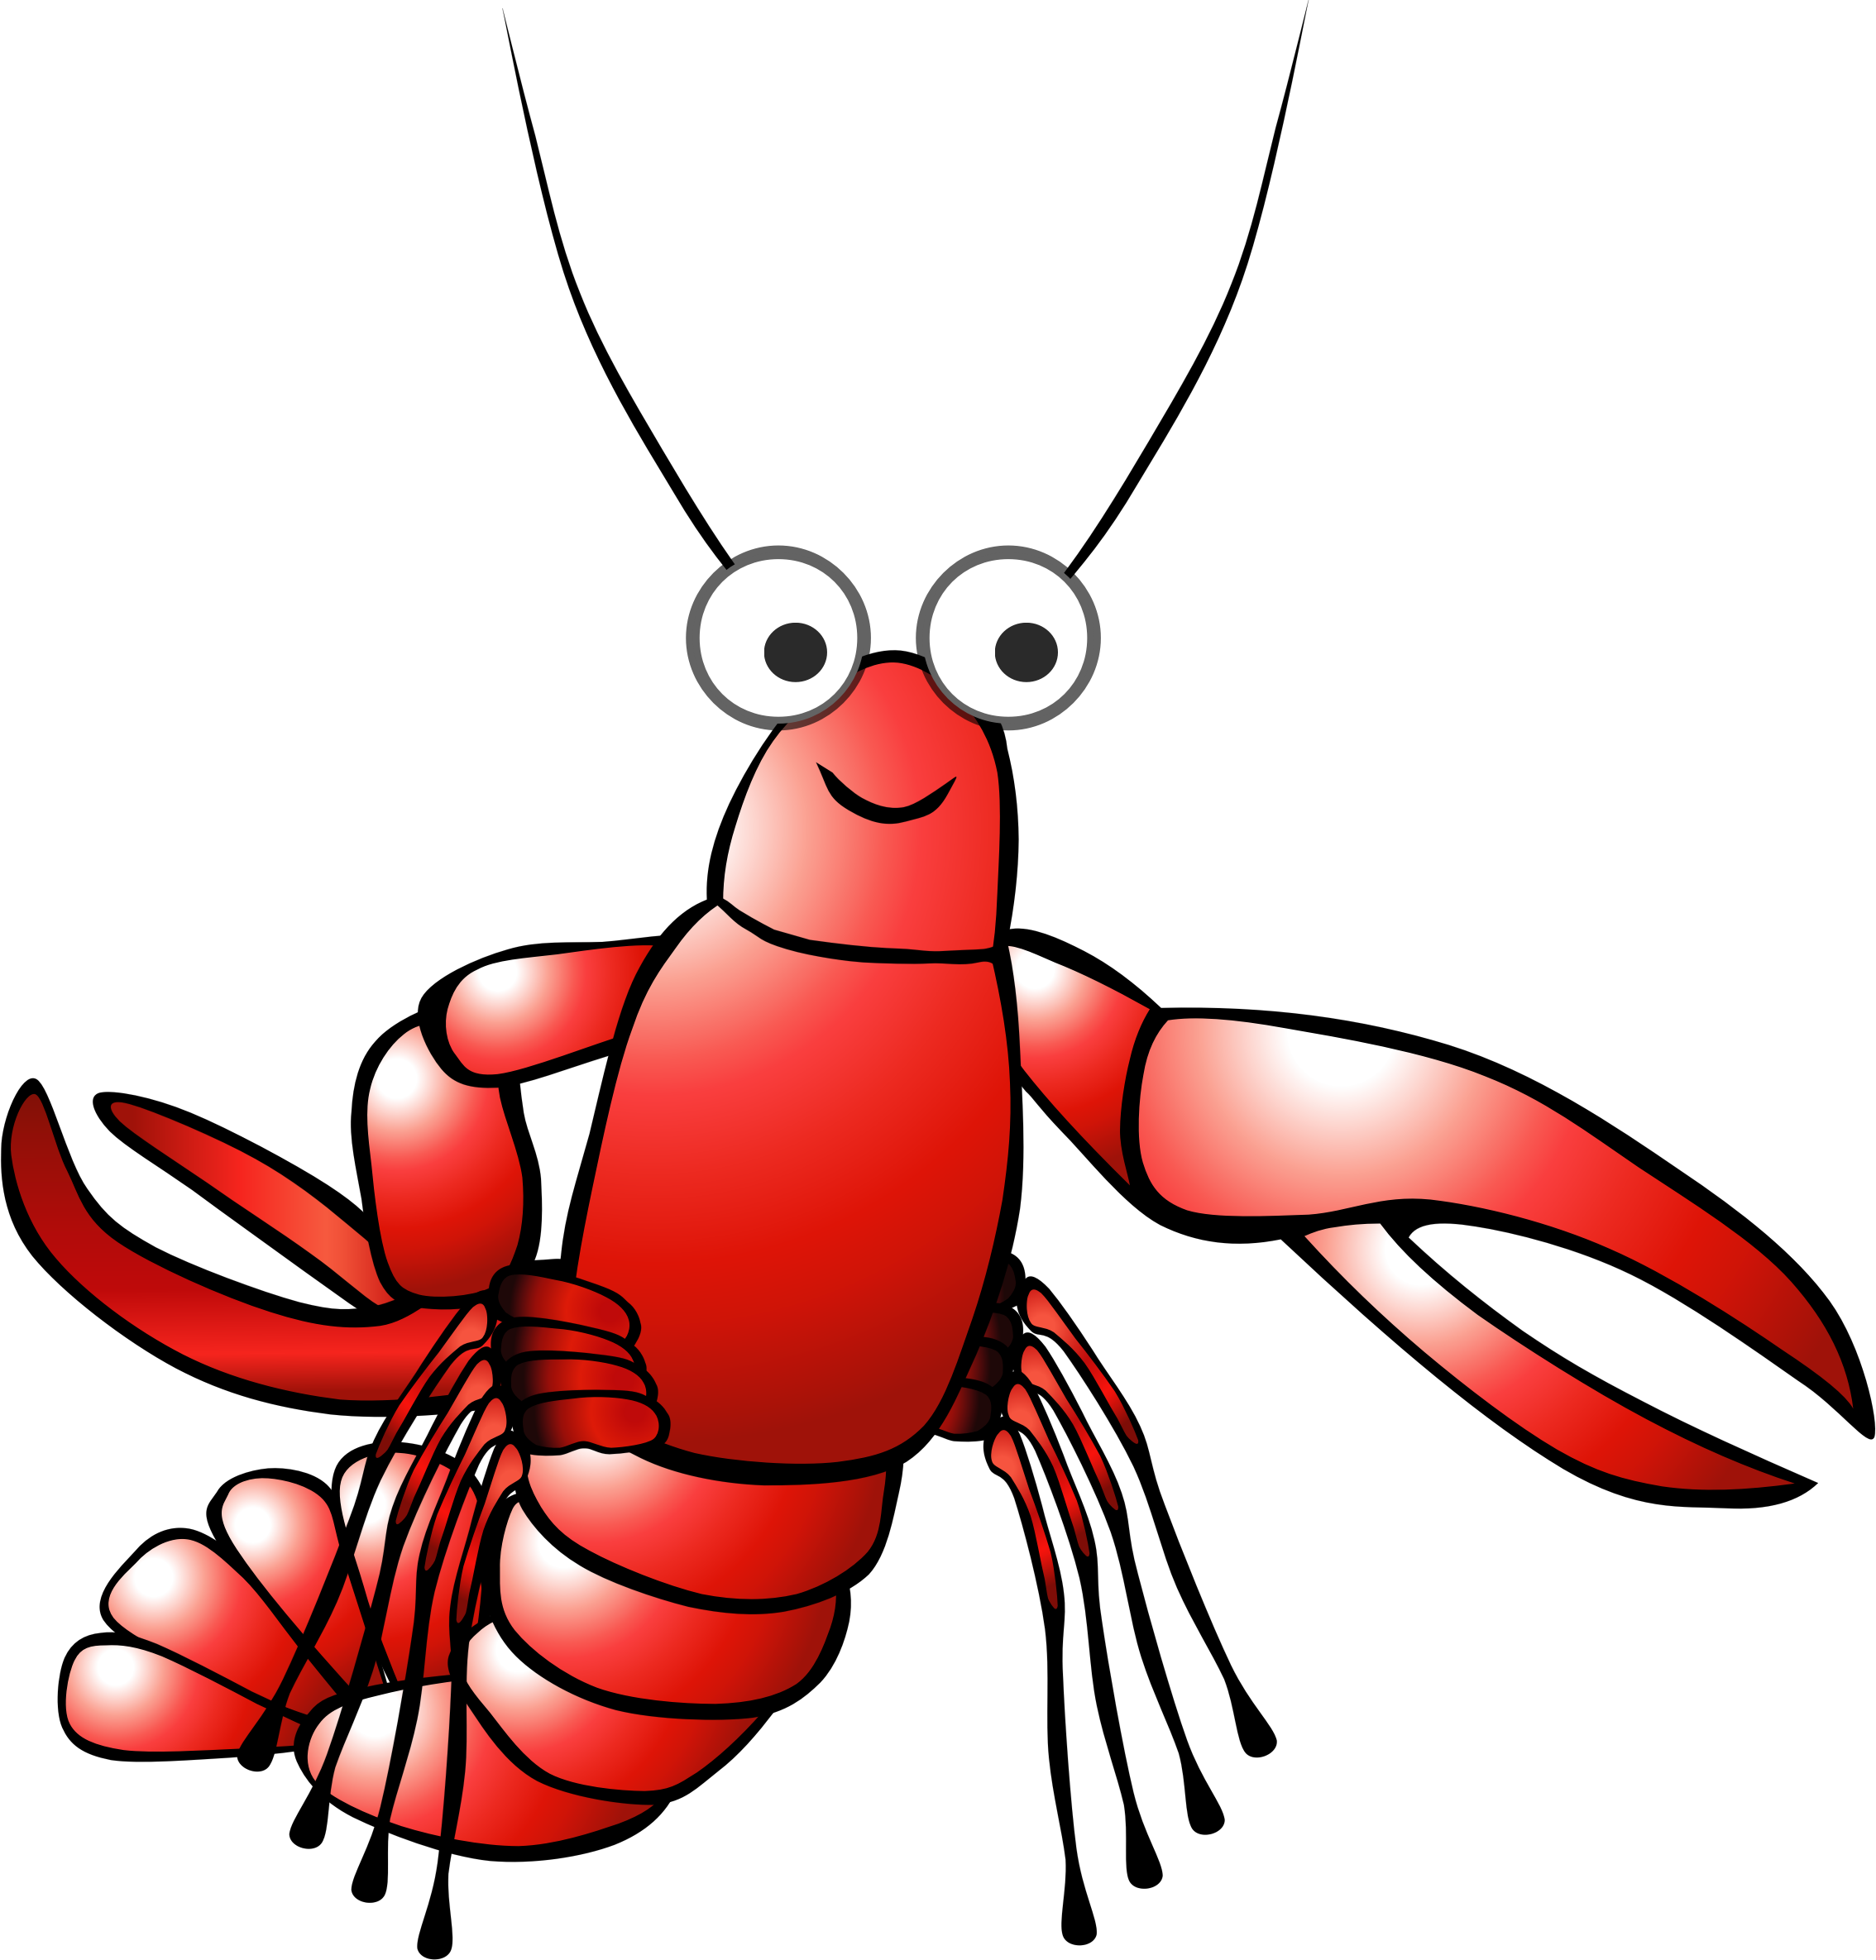 Clipart - Red cartoon lobster